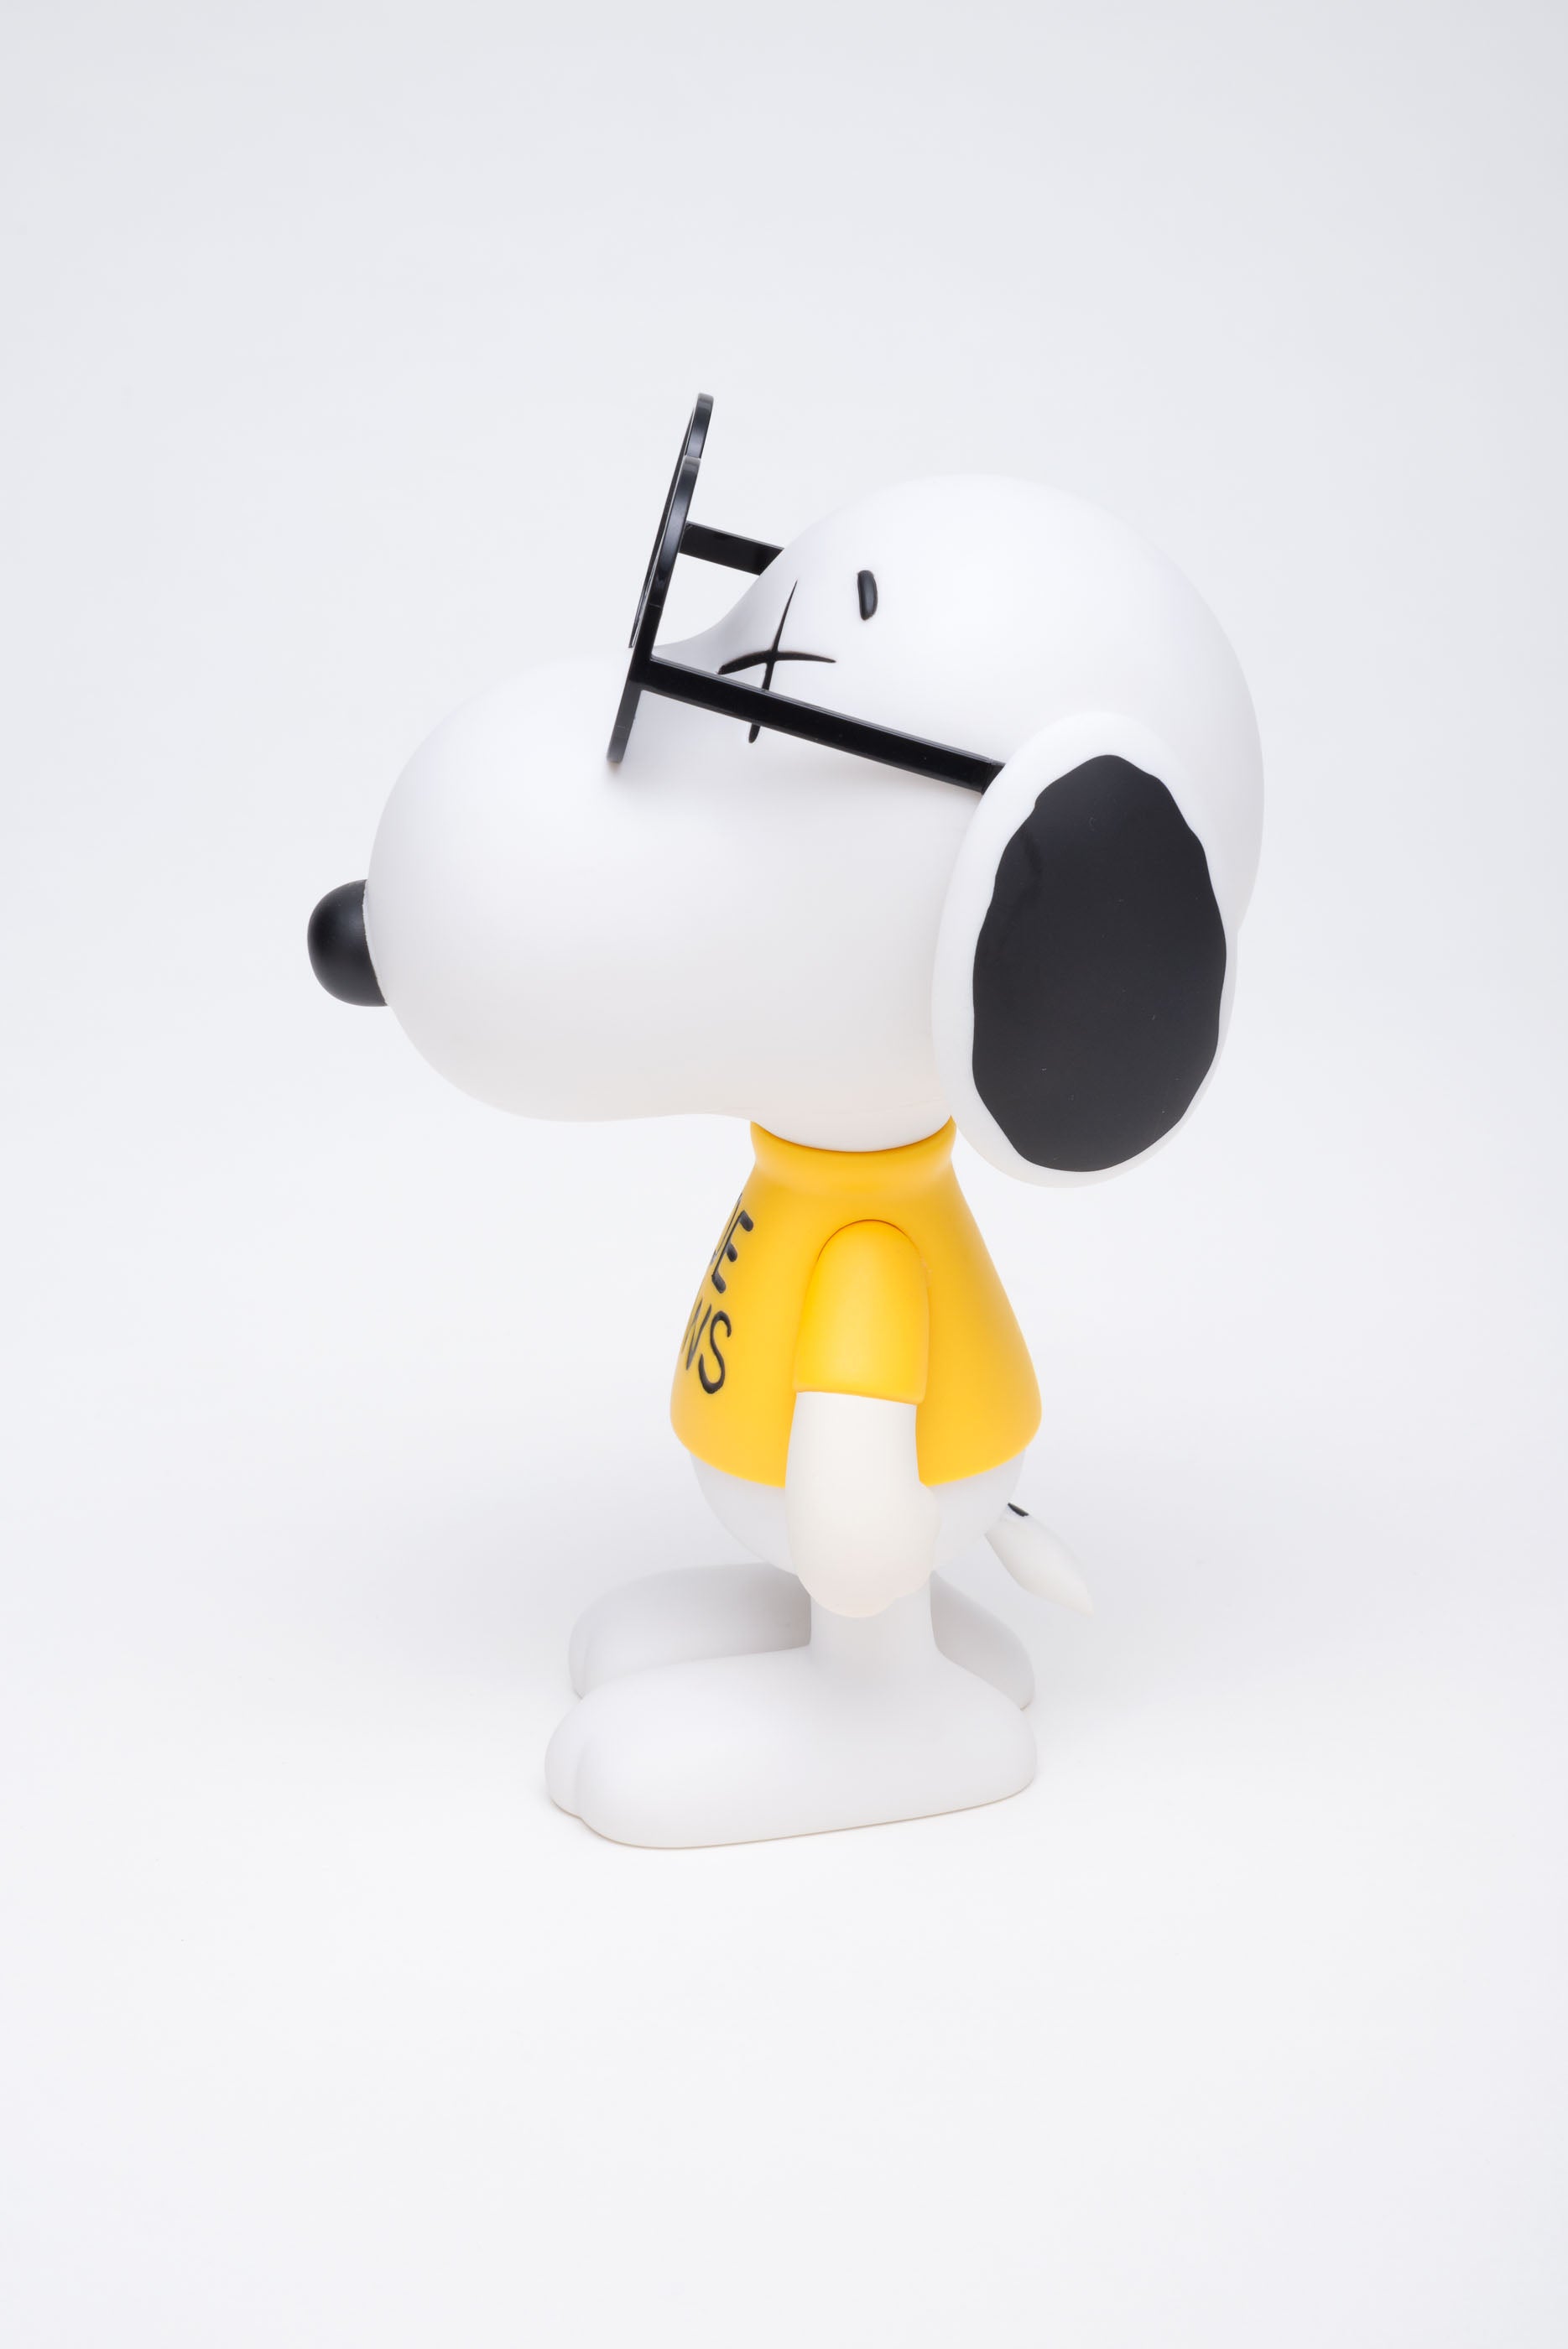 Joe Kaws Snoopy – CANDYBAR Gallery